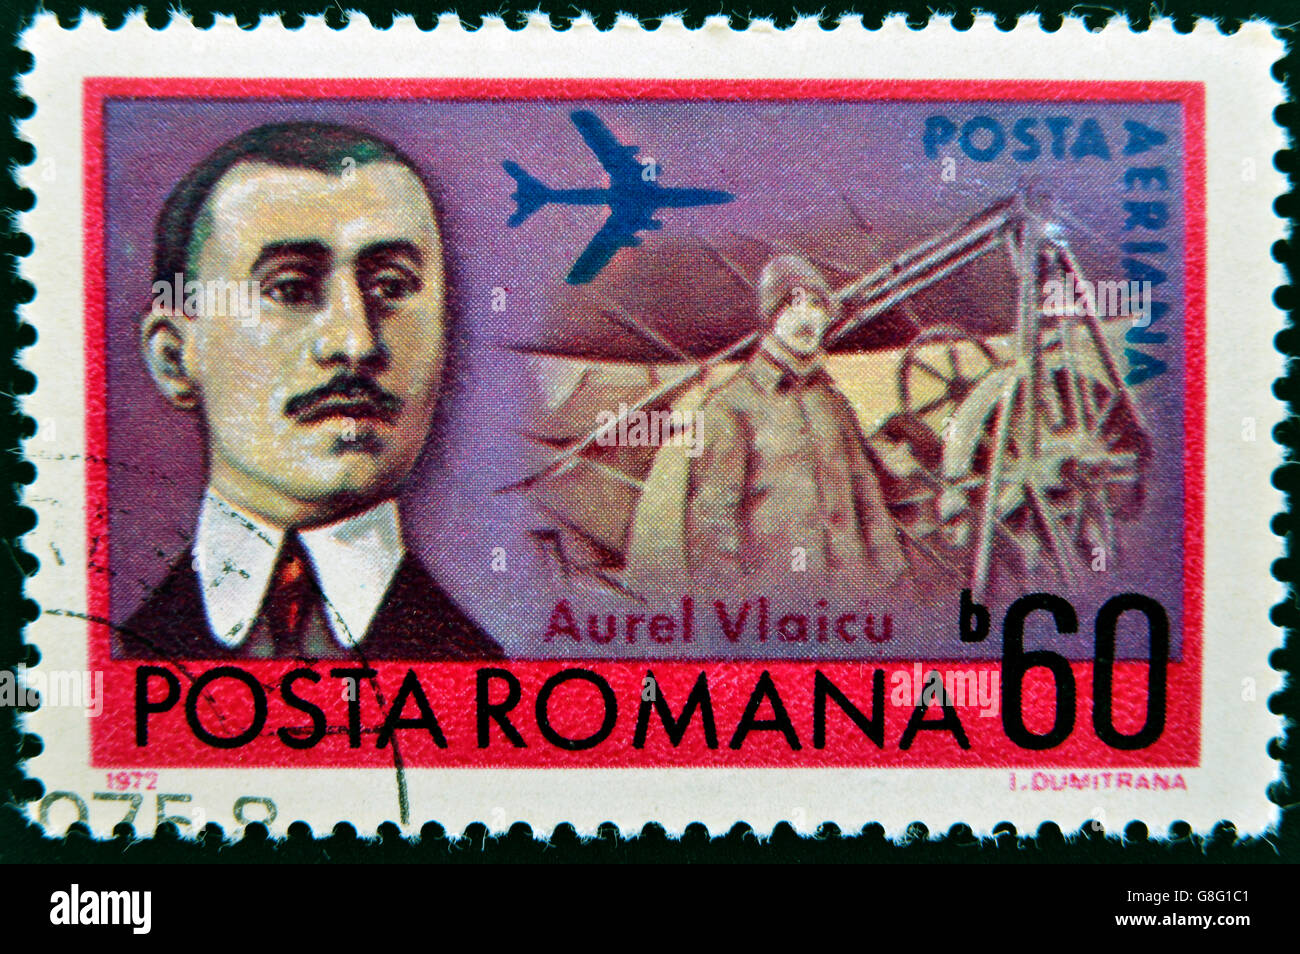 ROMANIA - CIRCA 1972: A stamp printed in Romania show Aurel Vlaicu, aviation pioneer, circa 1972. Stock Photo